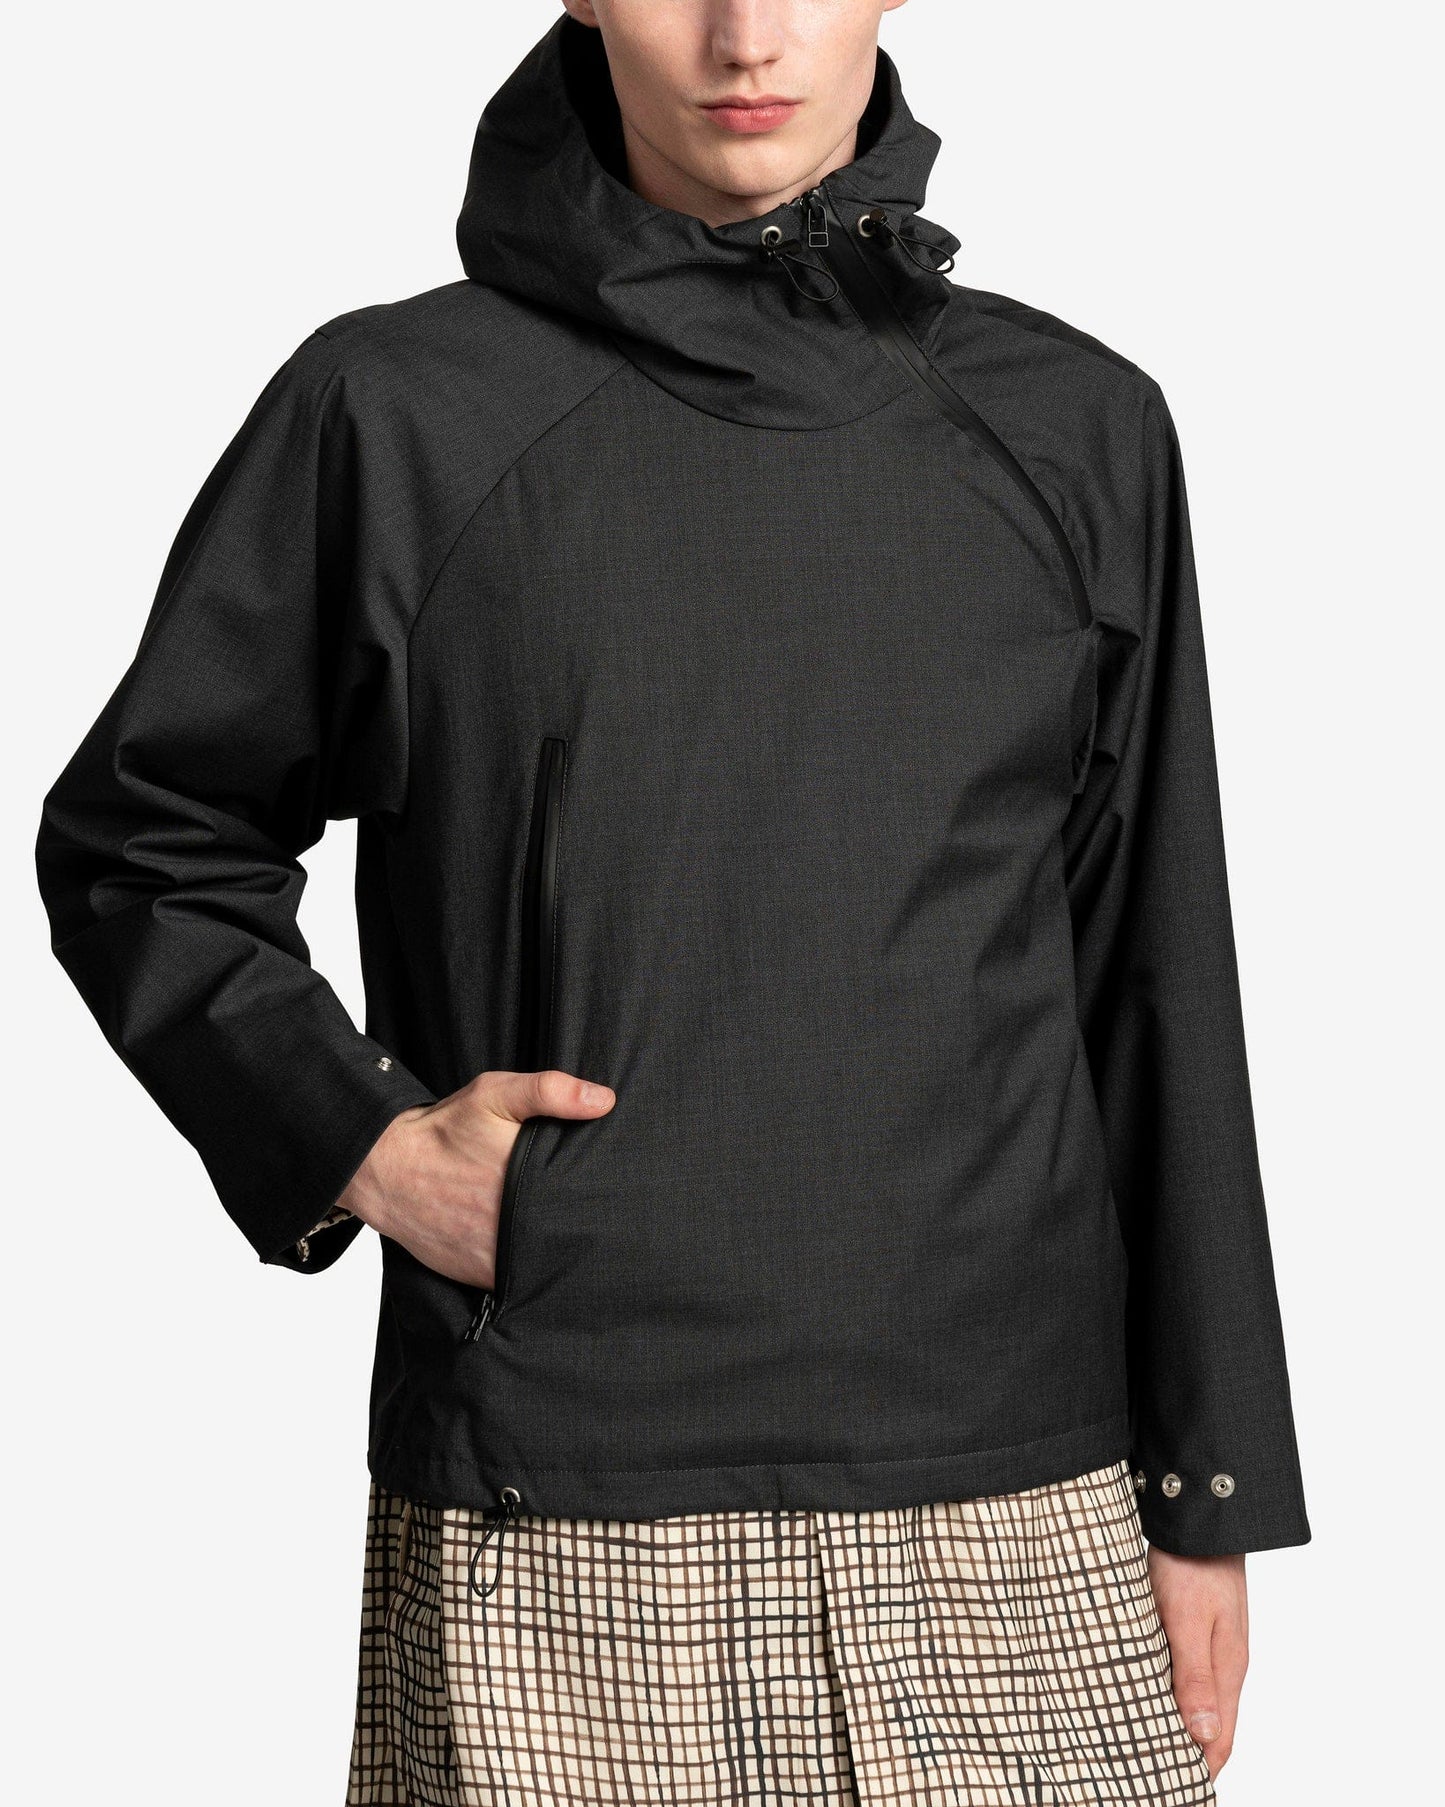 Omar Afridi Men's Jackets Anorak Parka in Dark Grey